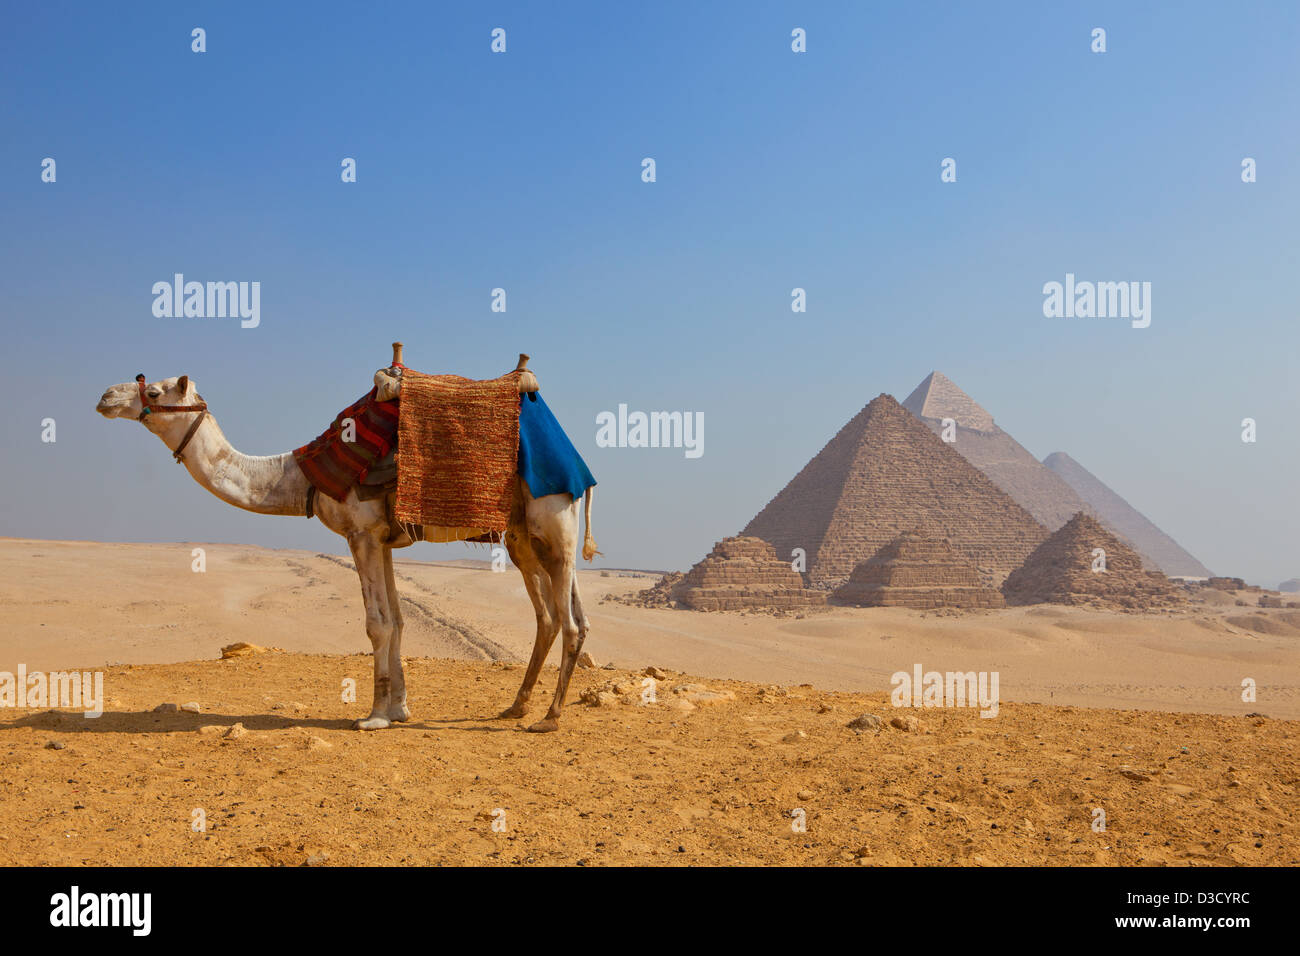 Giza Pyramids in Cairo, Egypt Stock Photo